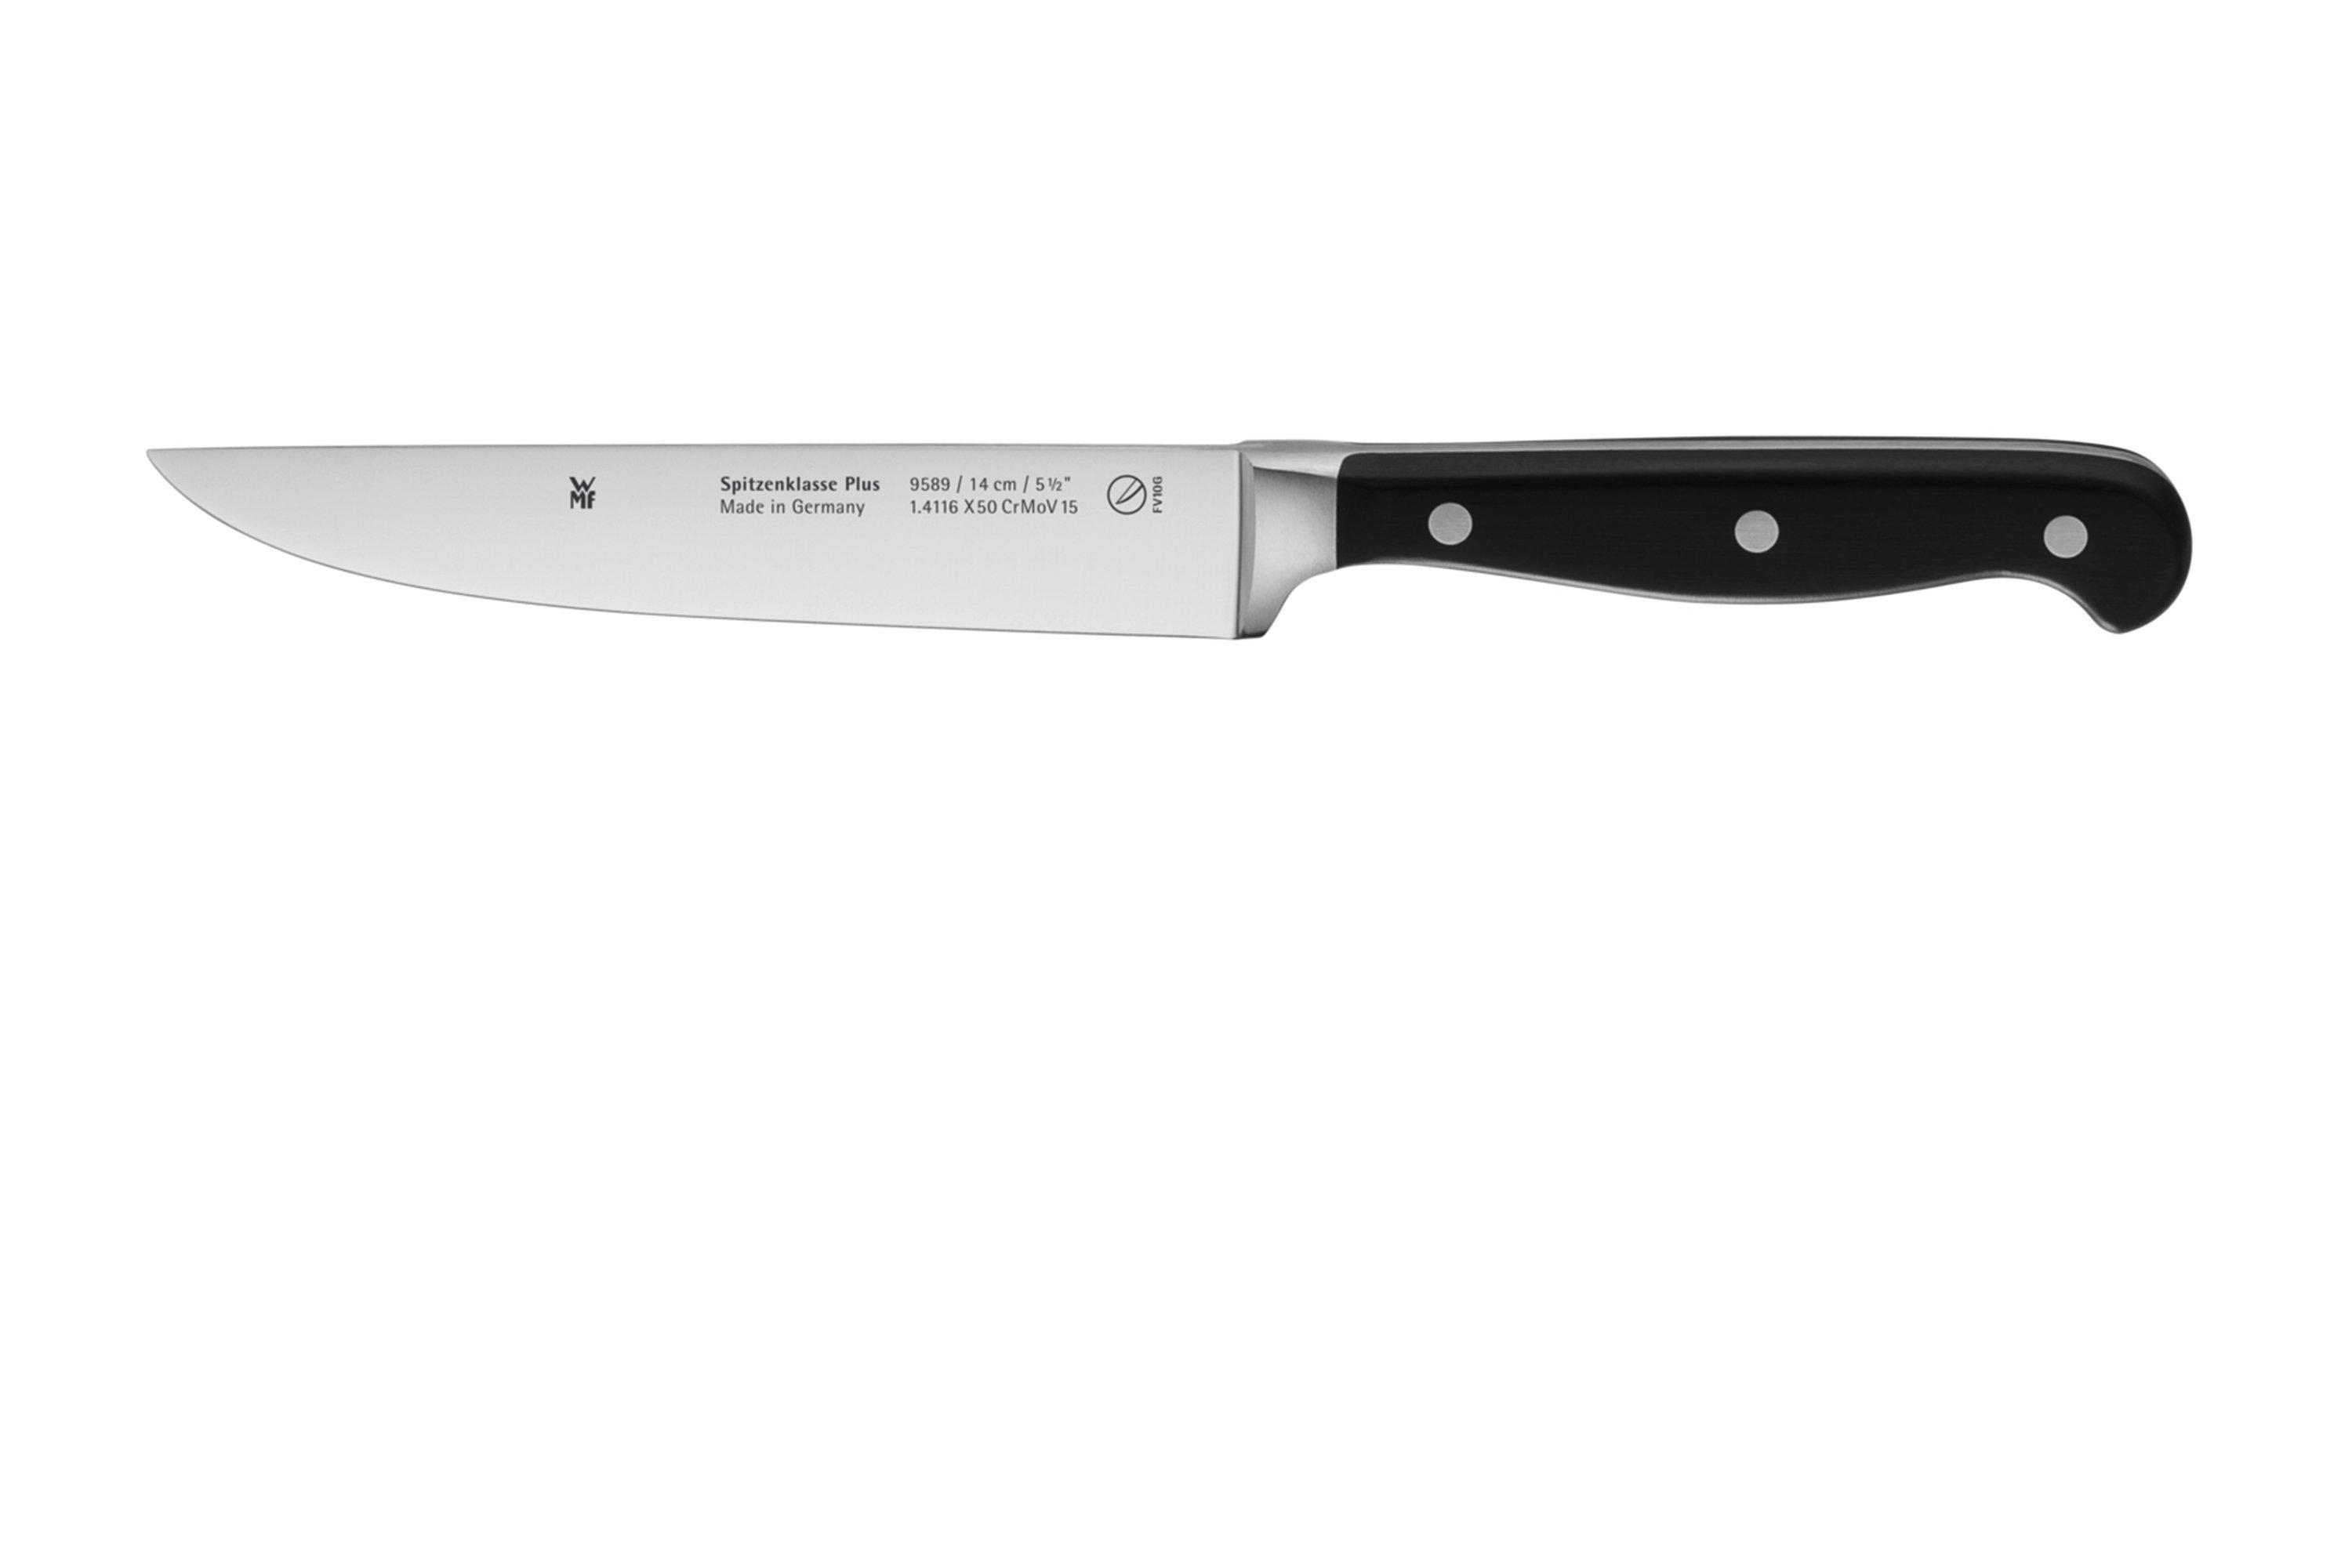 WMF Spitzenklasse Plus 1894919992, | shopping Advantageously 3-piece knife set at